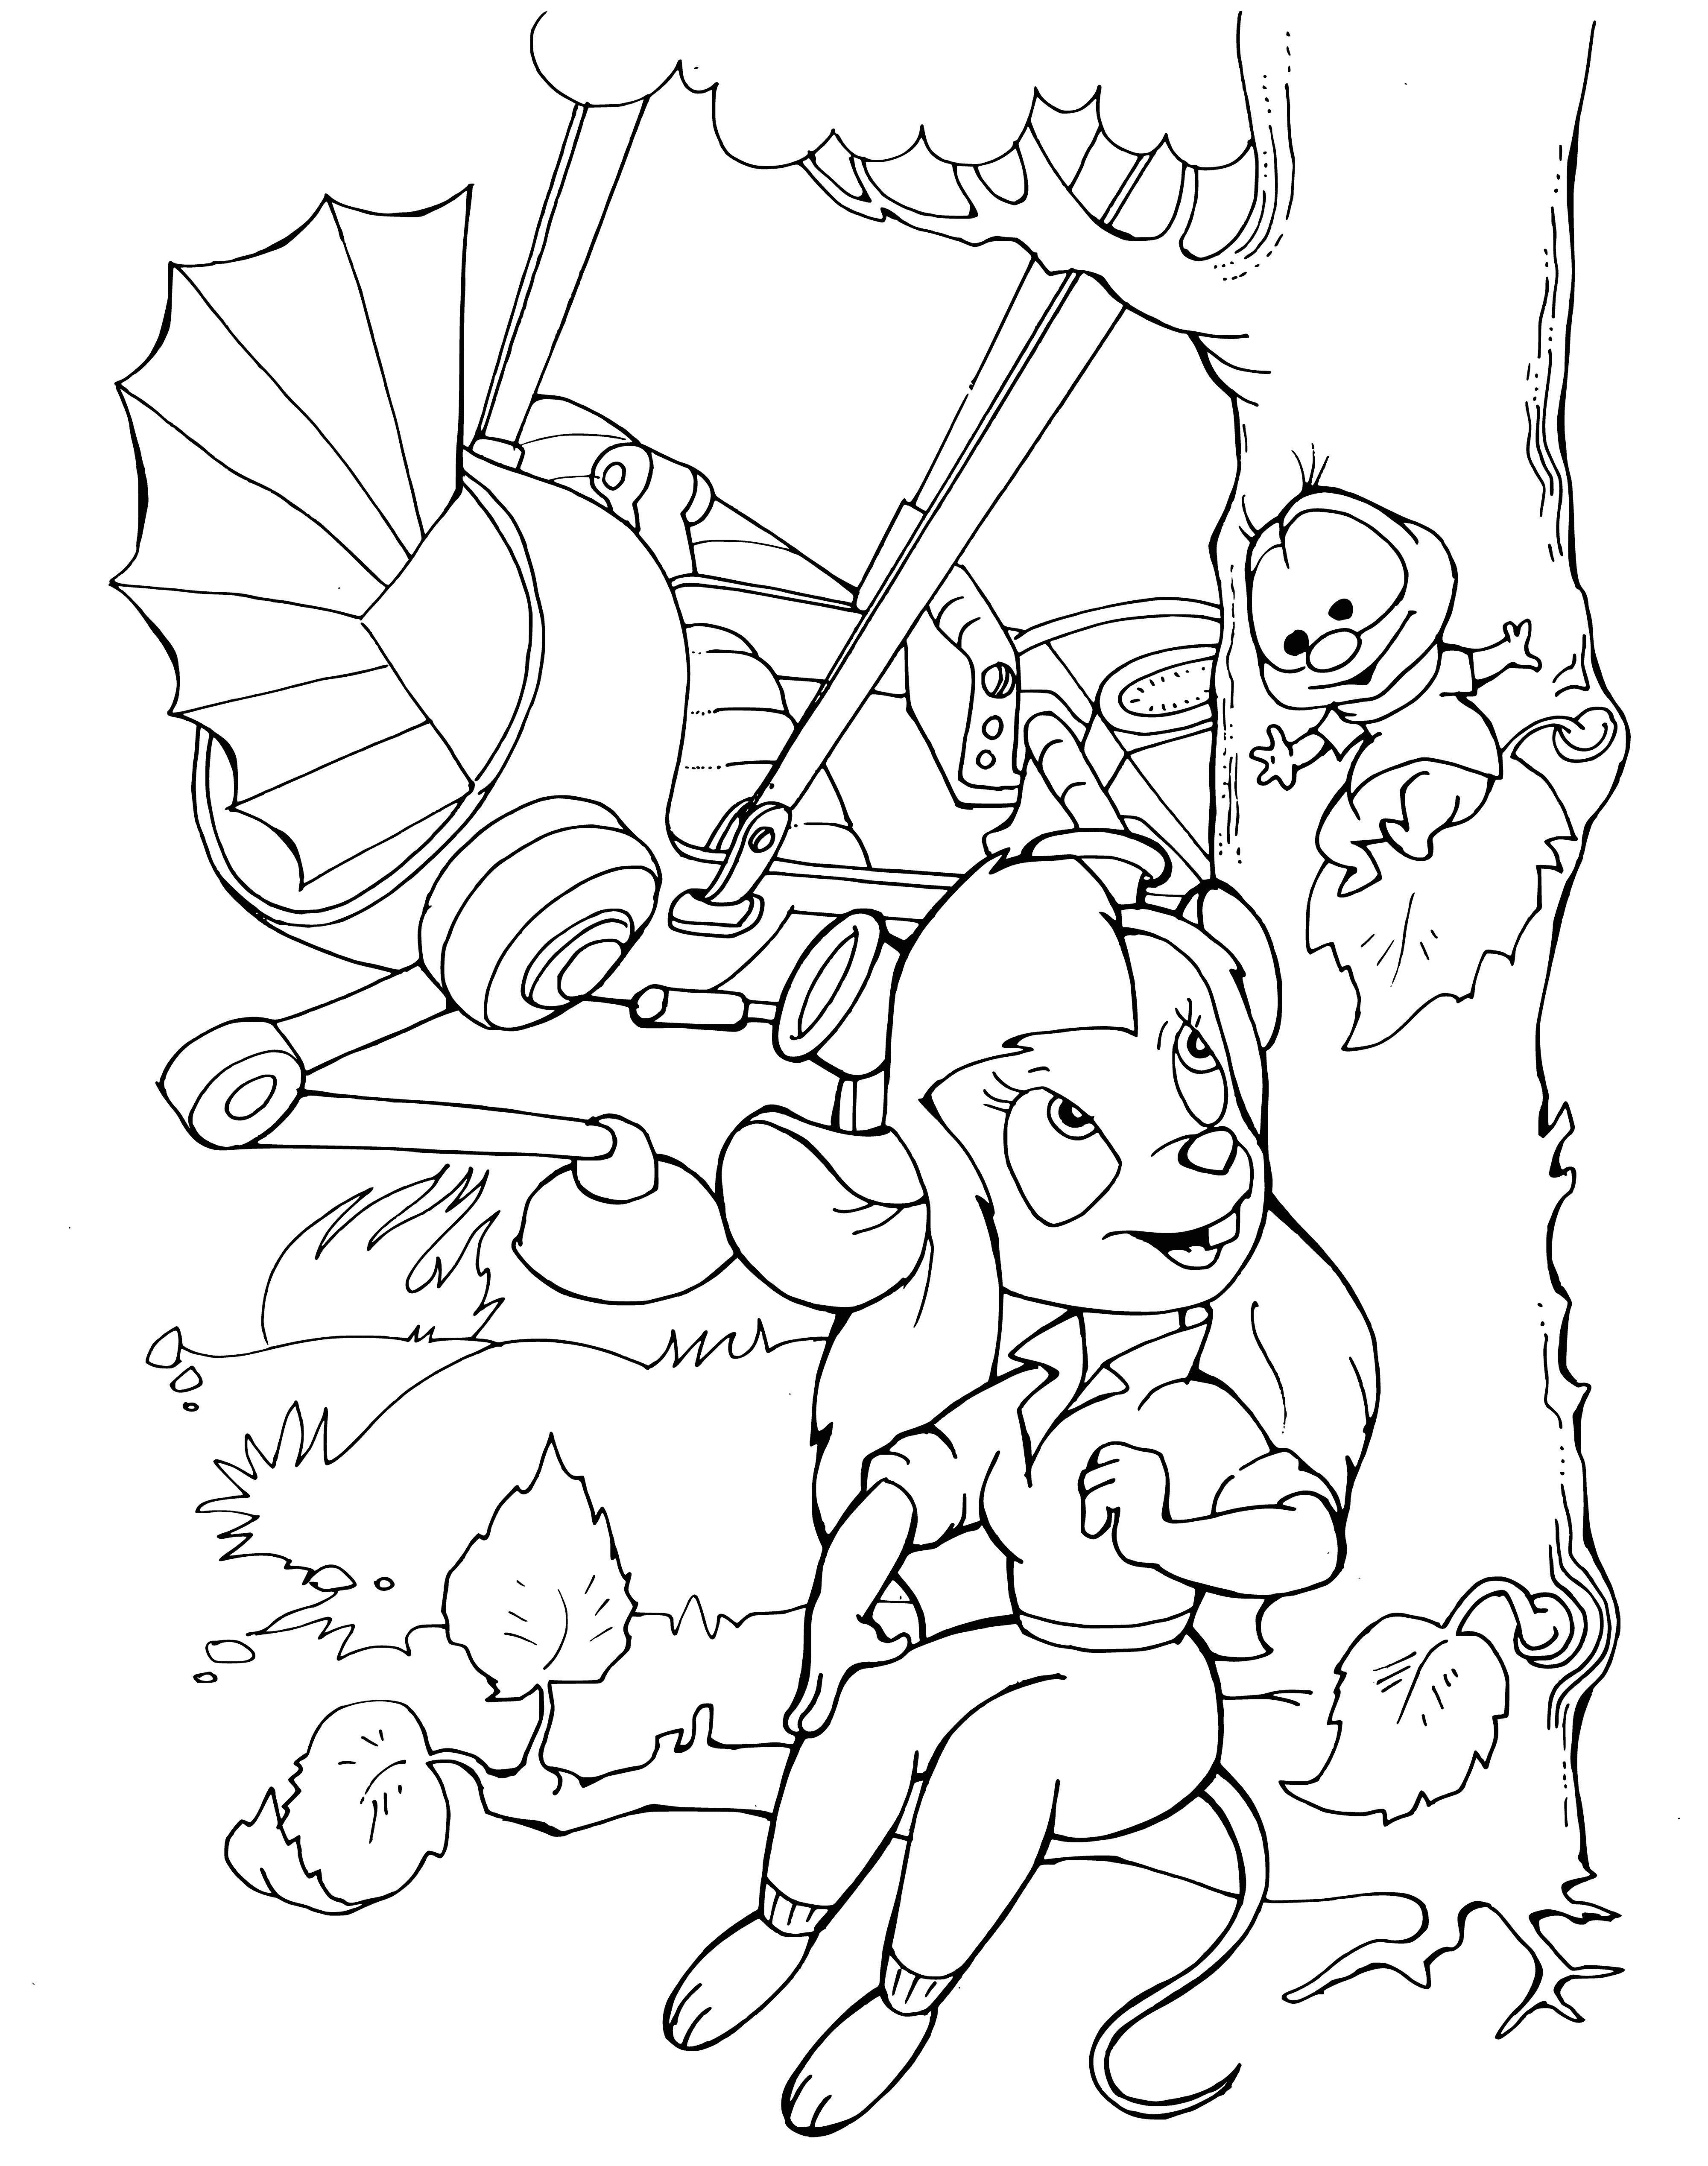 Zipper and Kaichka coloring page